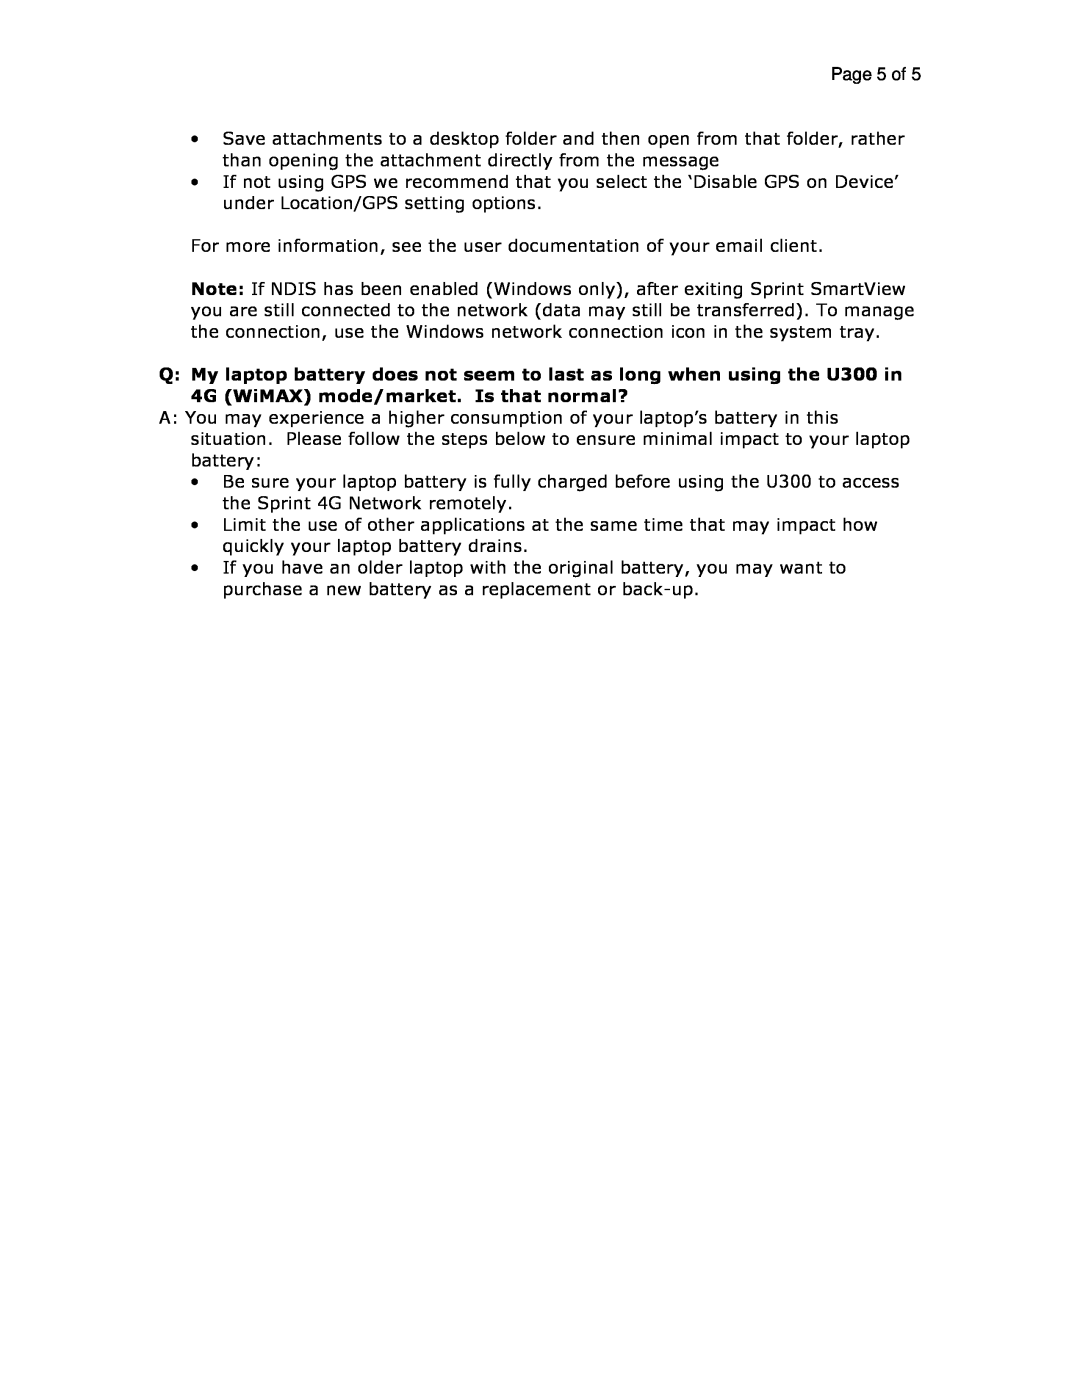 Sprint Nextel U300 manual Page 5 of 